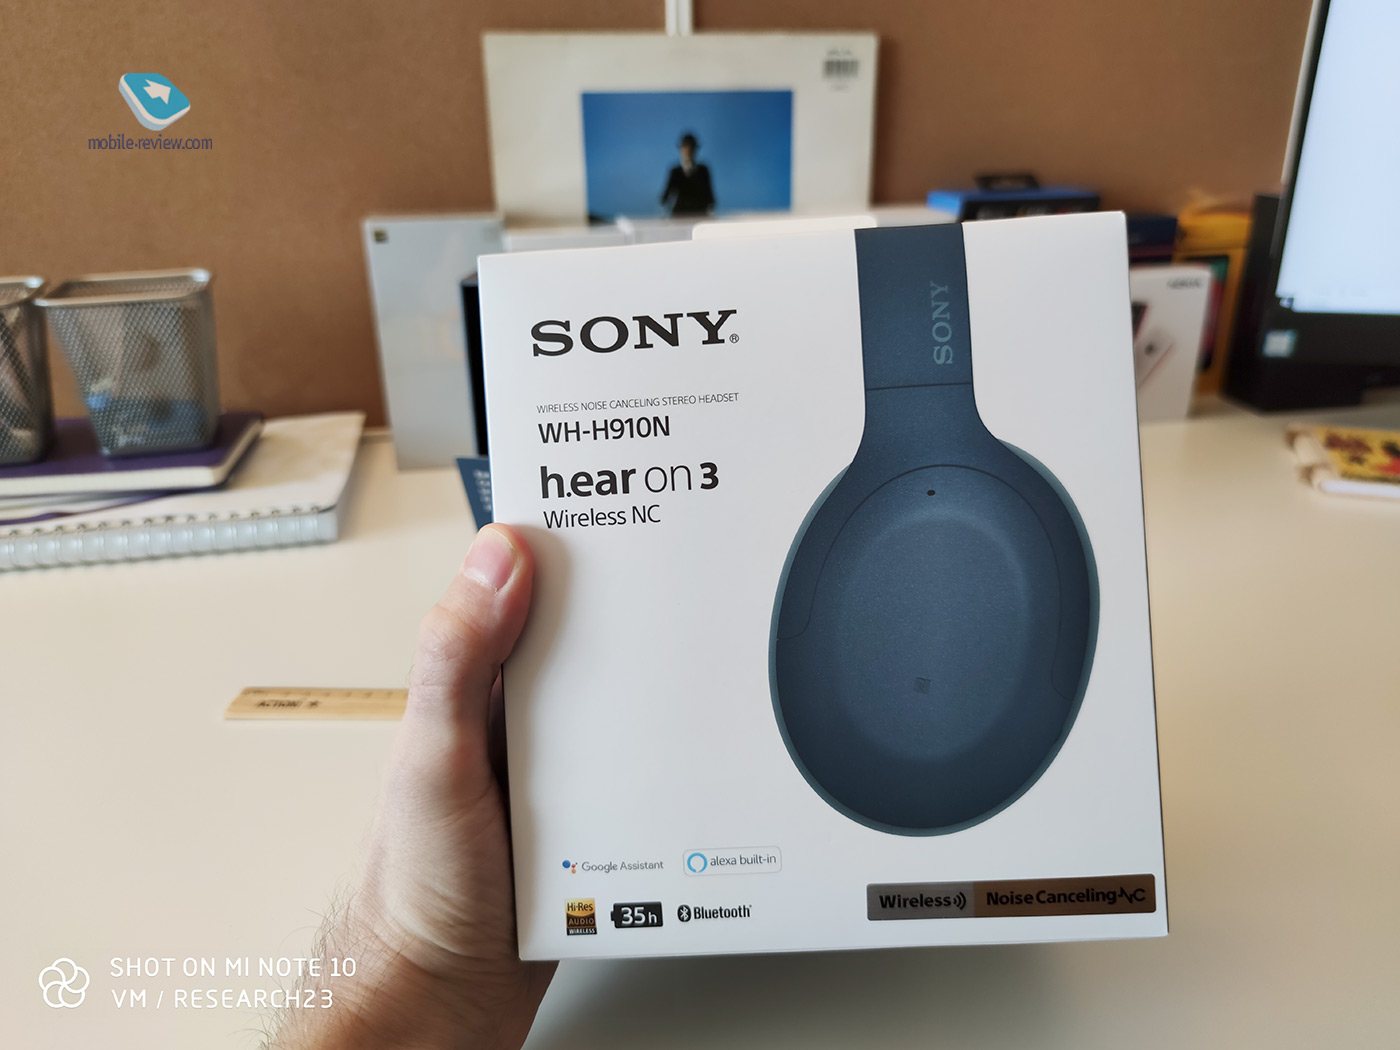  Sony WH-H910N h.ear on 3:    